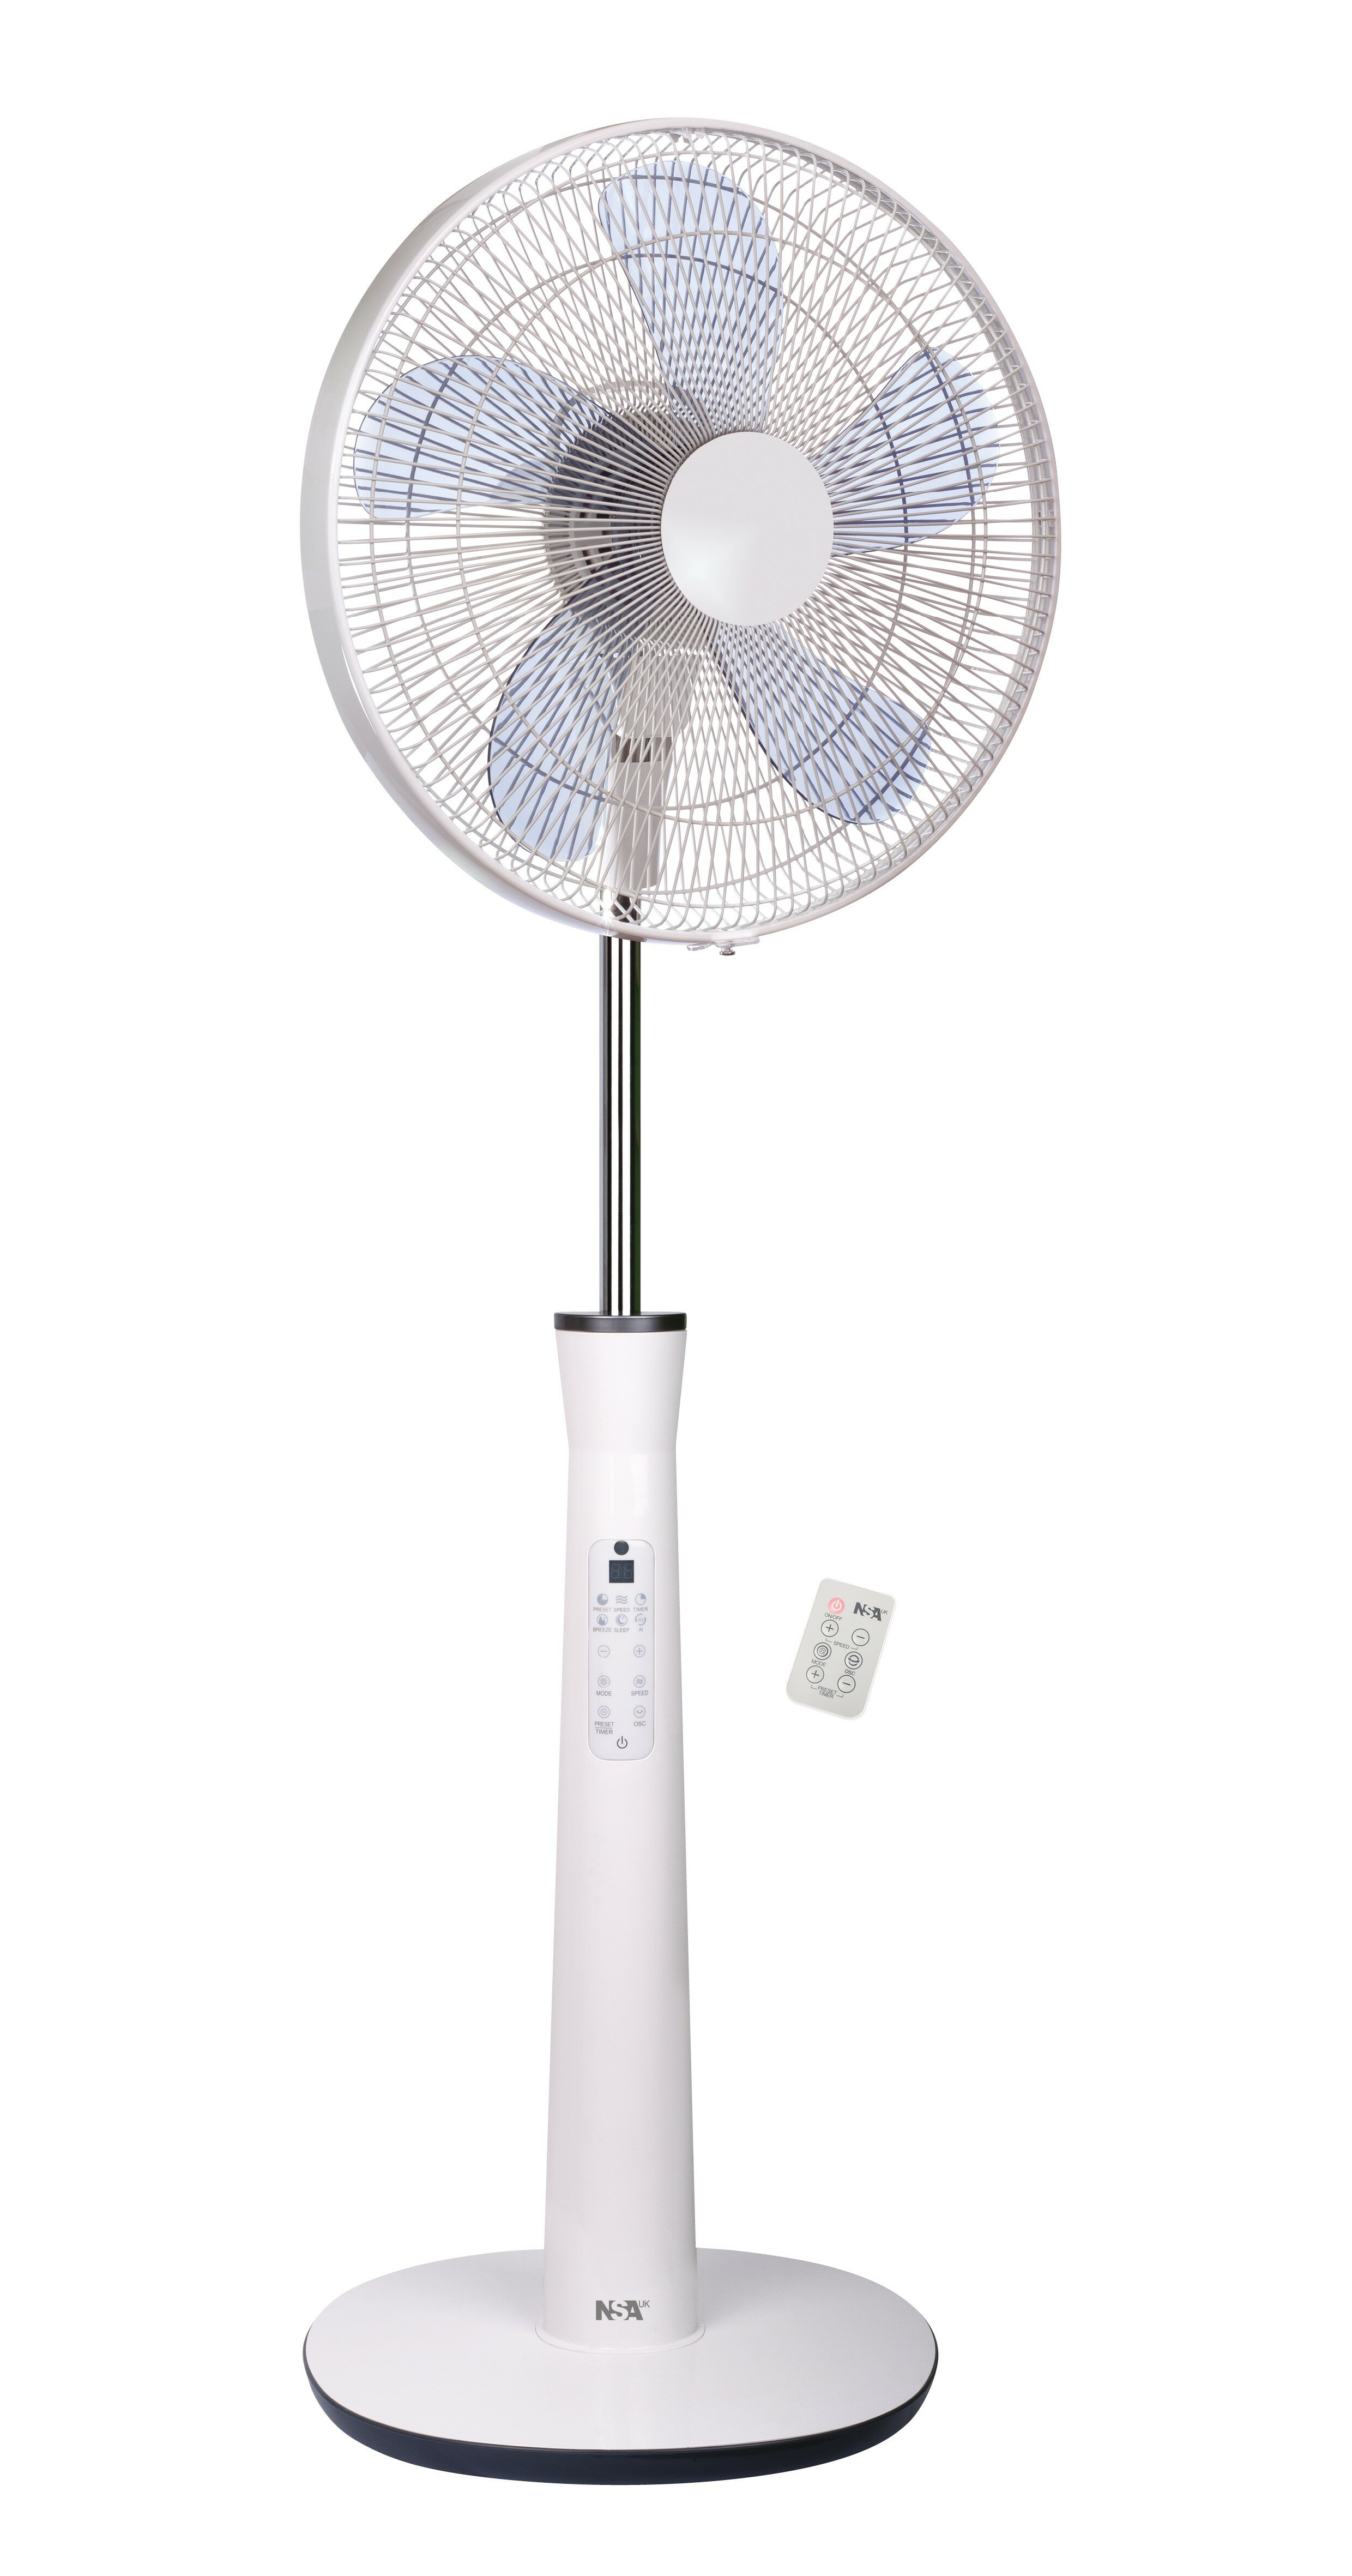 PIFCO Oscillating 30.4 cm Pedestal Fan